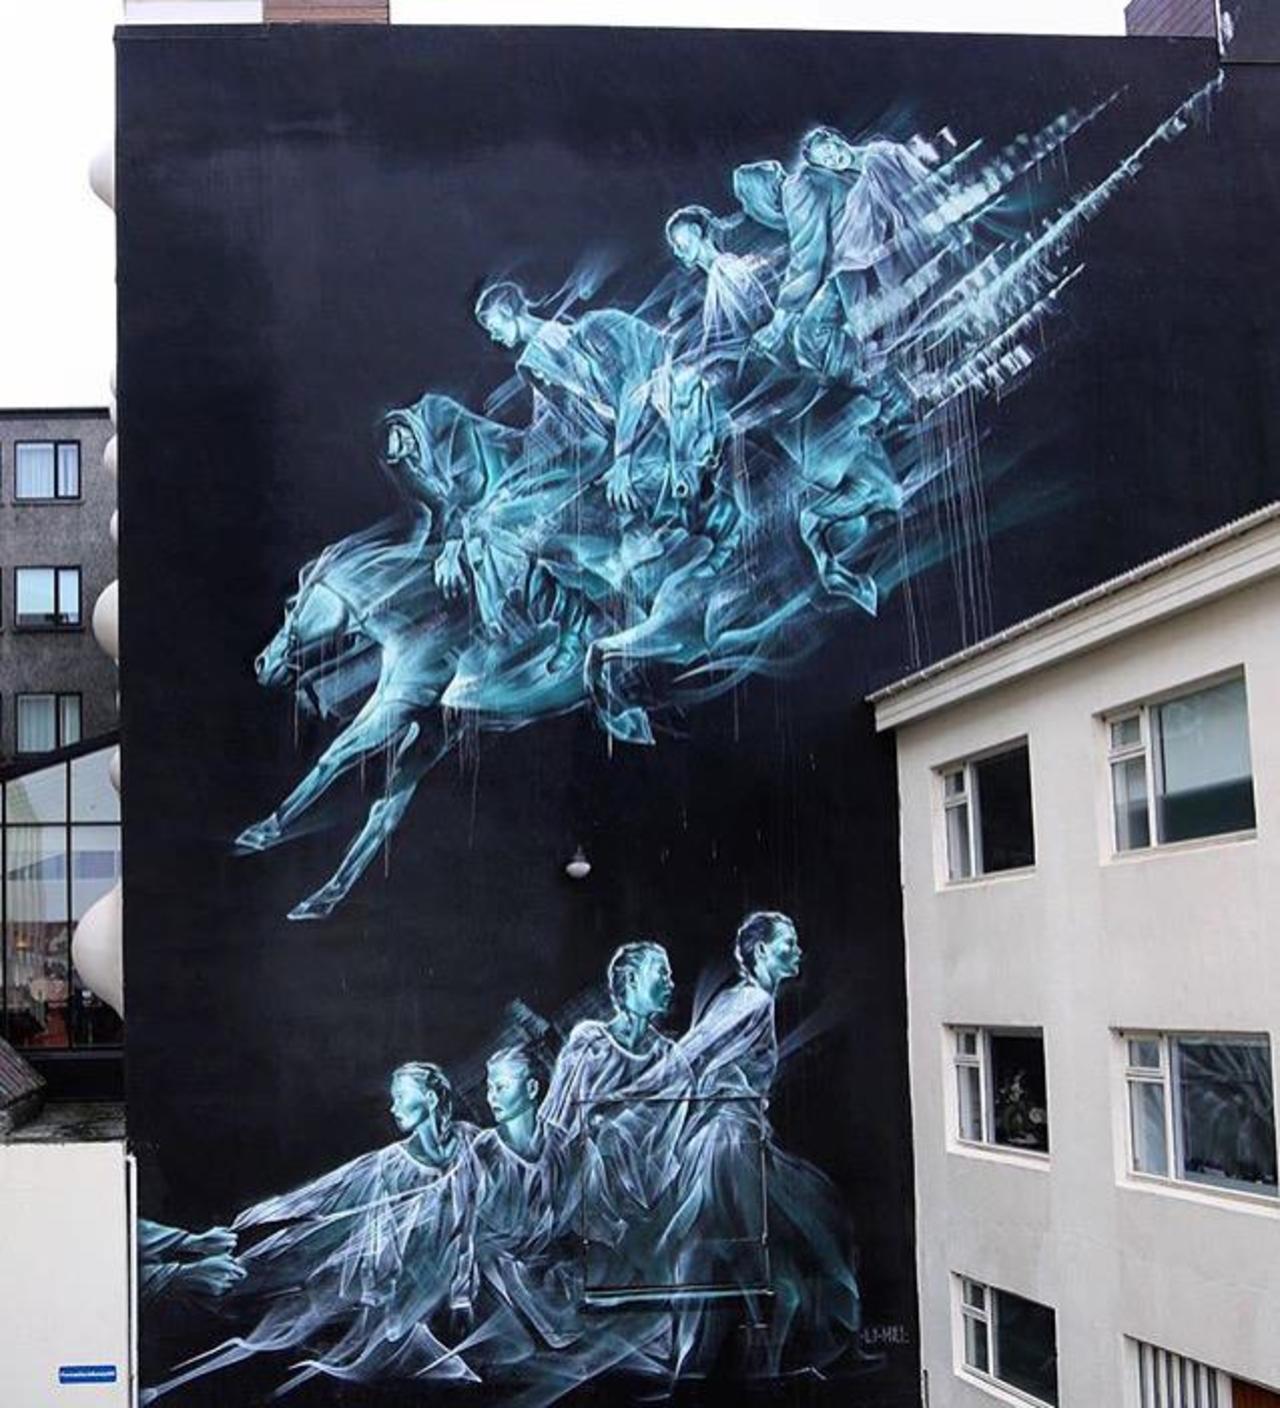 RT belilac "Street Art by li hill in Reykjavik 

#art #graffiti #mural #streetart http://t.co/XXVVvWEt3F"